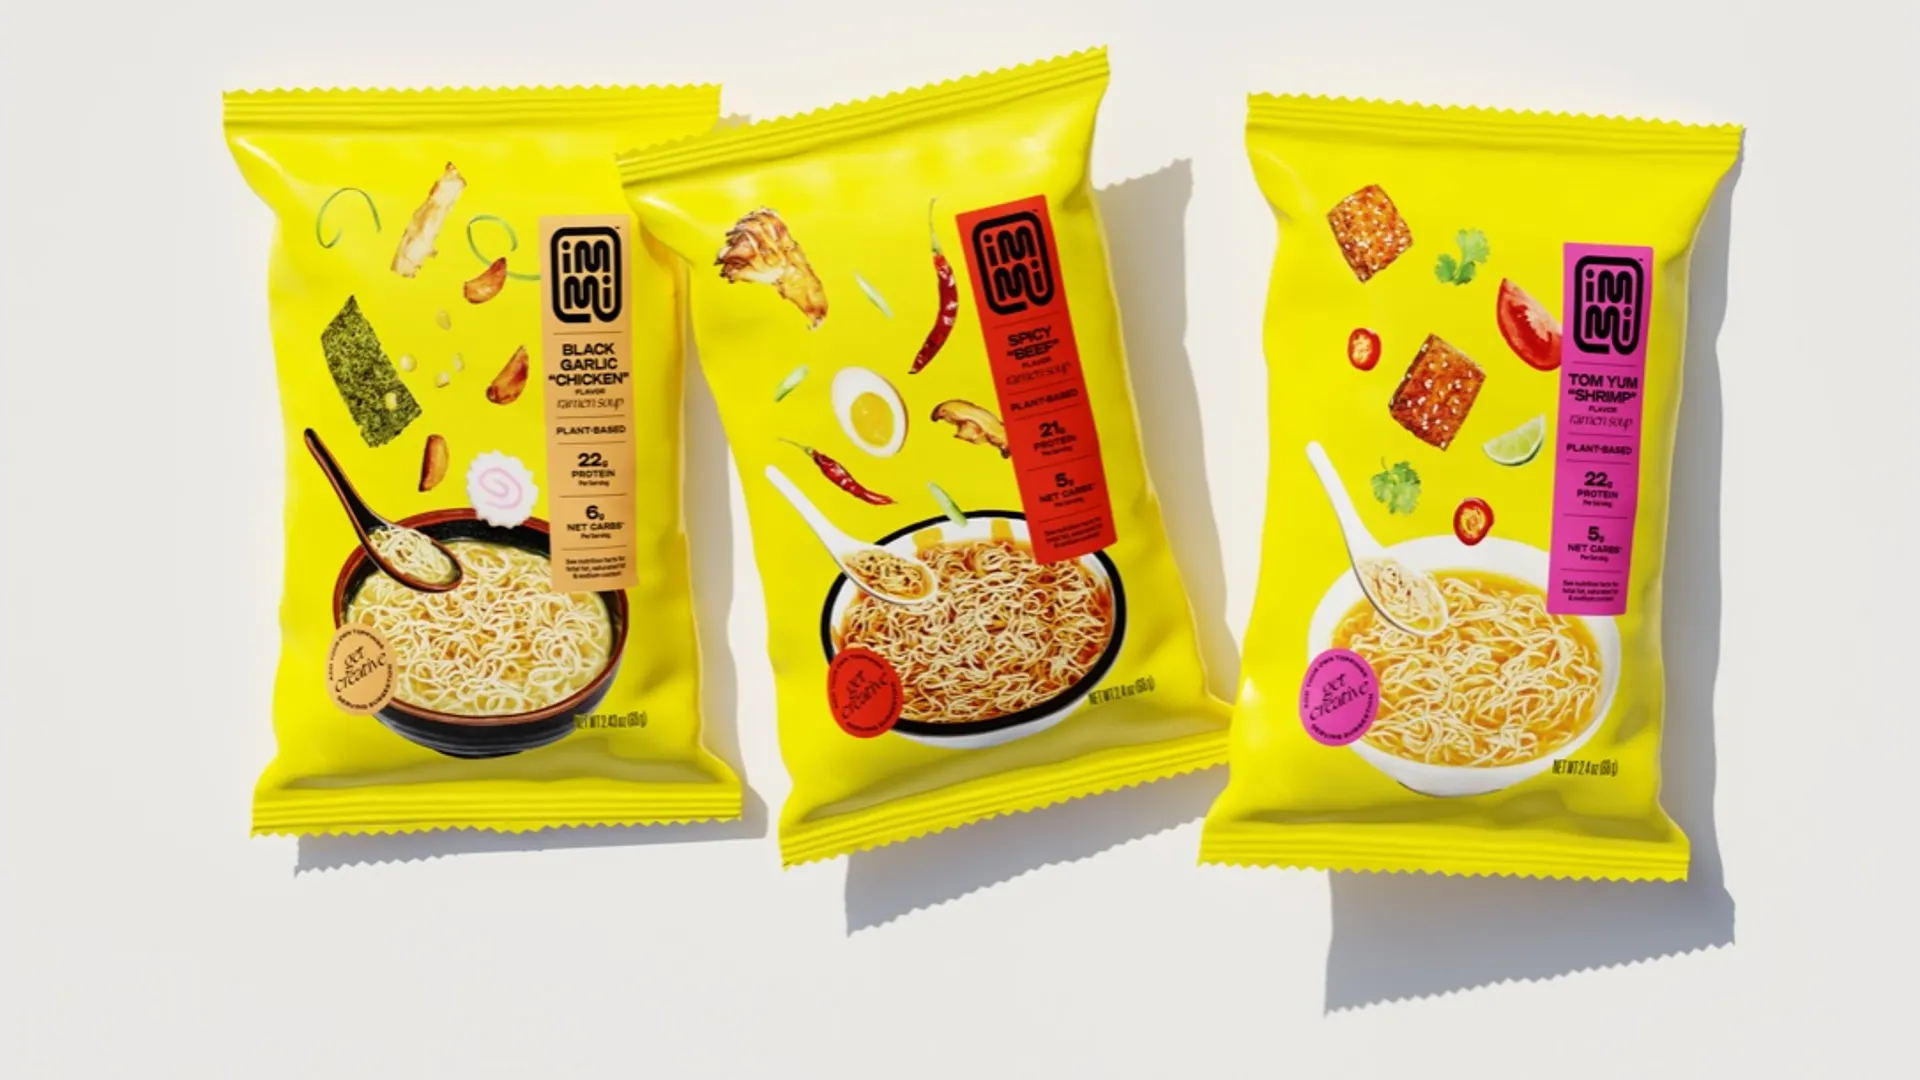 22 Vegan Packaging Designs  Dieline - Design, Branding & Packaging  Inspiration